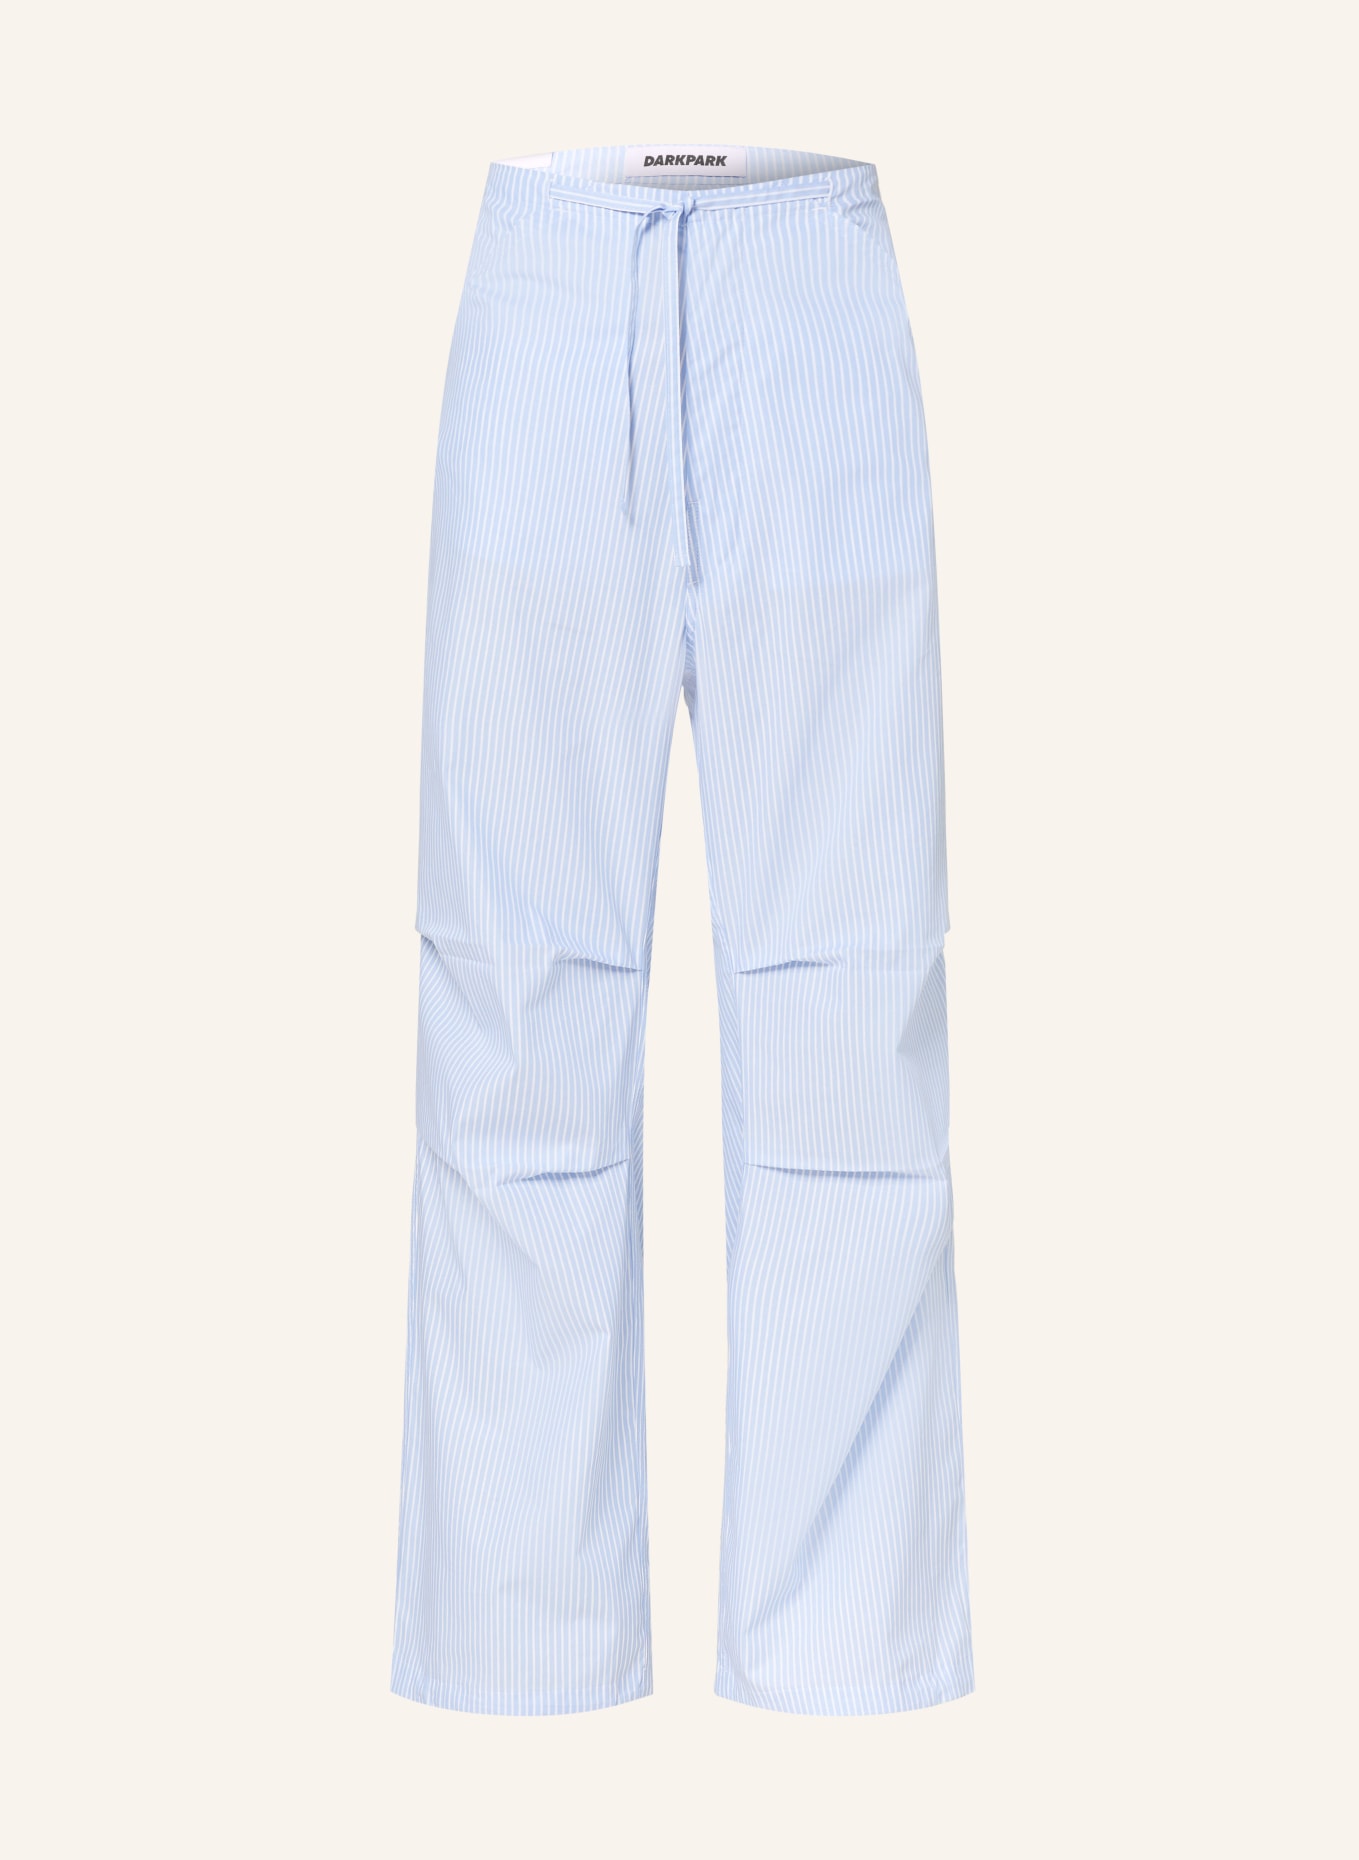 DARKPARK Trousers DAISY, Color: LIGHT BLUE/ WHITE (Image 1)